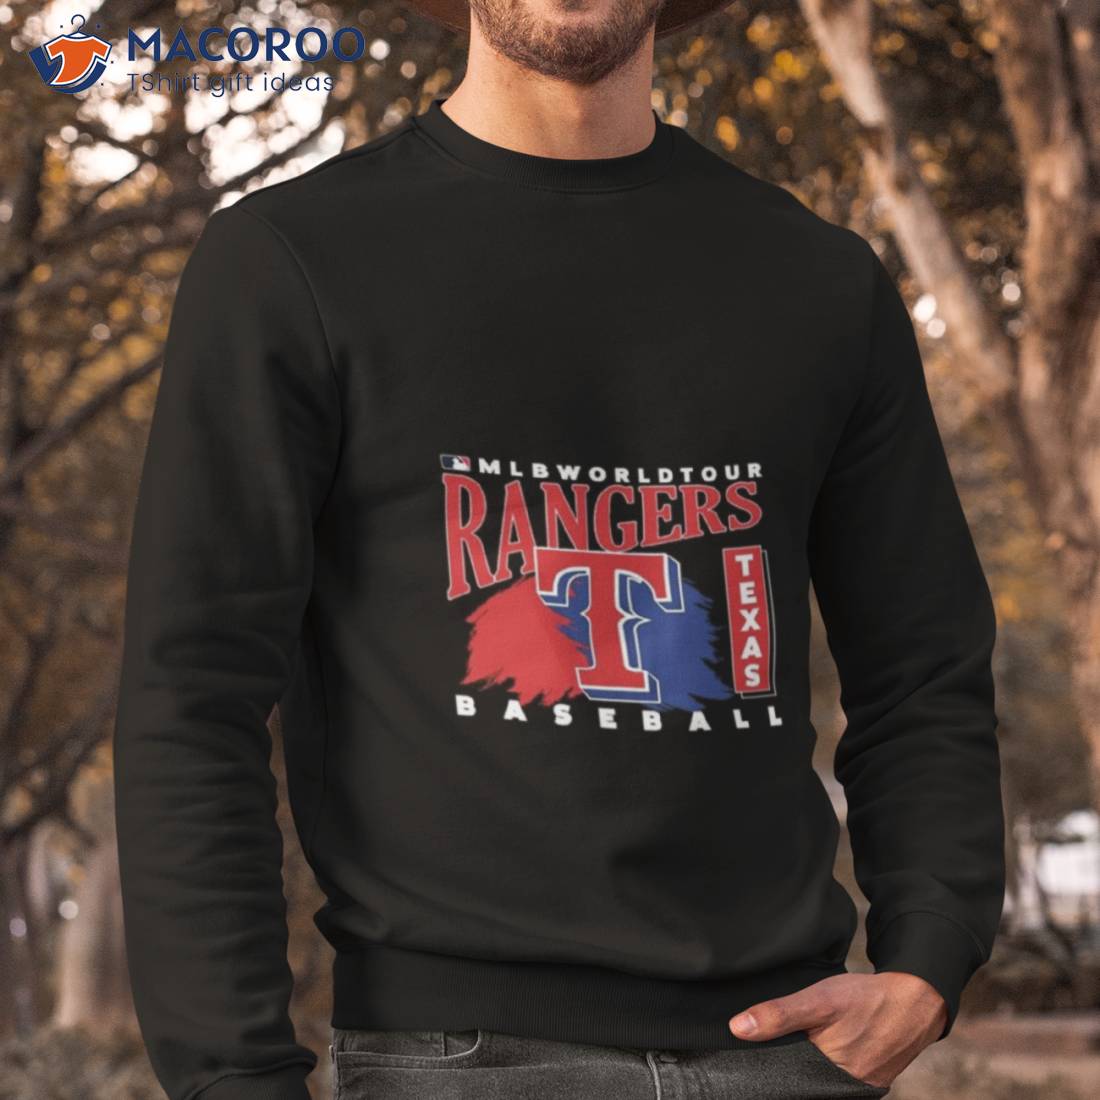 texas rangers throwback shirt